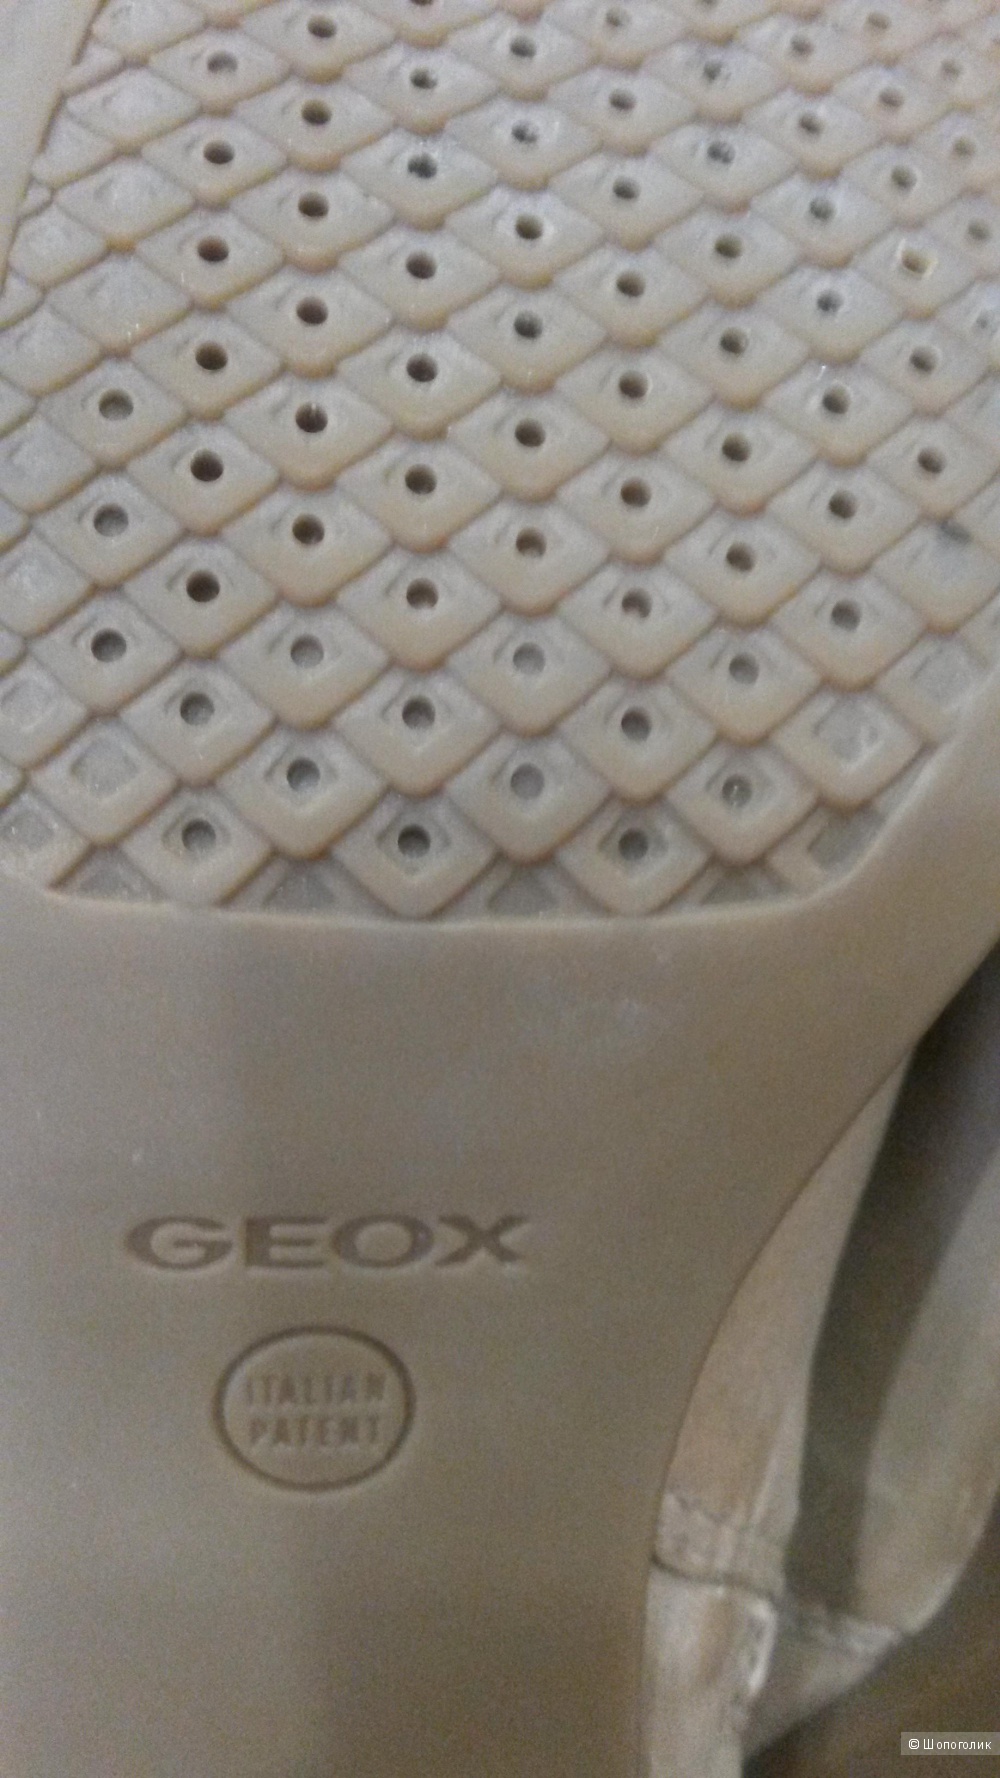 Сапоги кожаные Geox, 37 размер